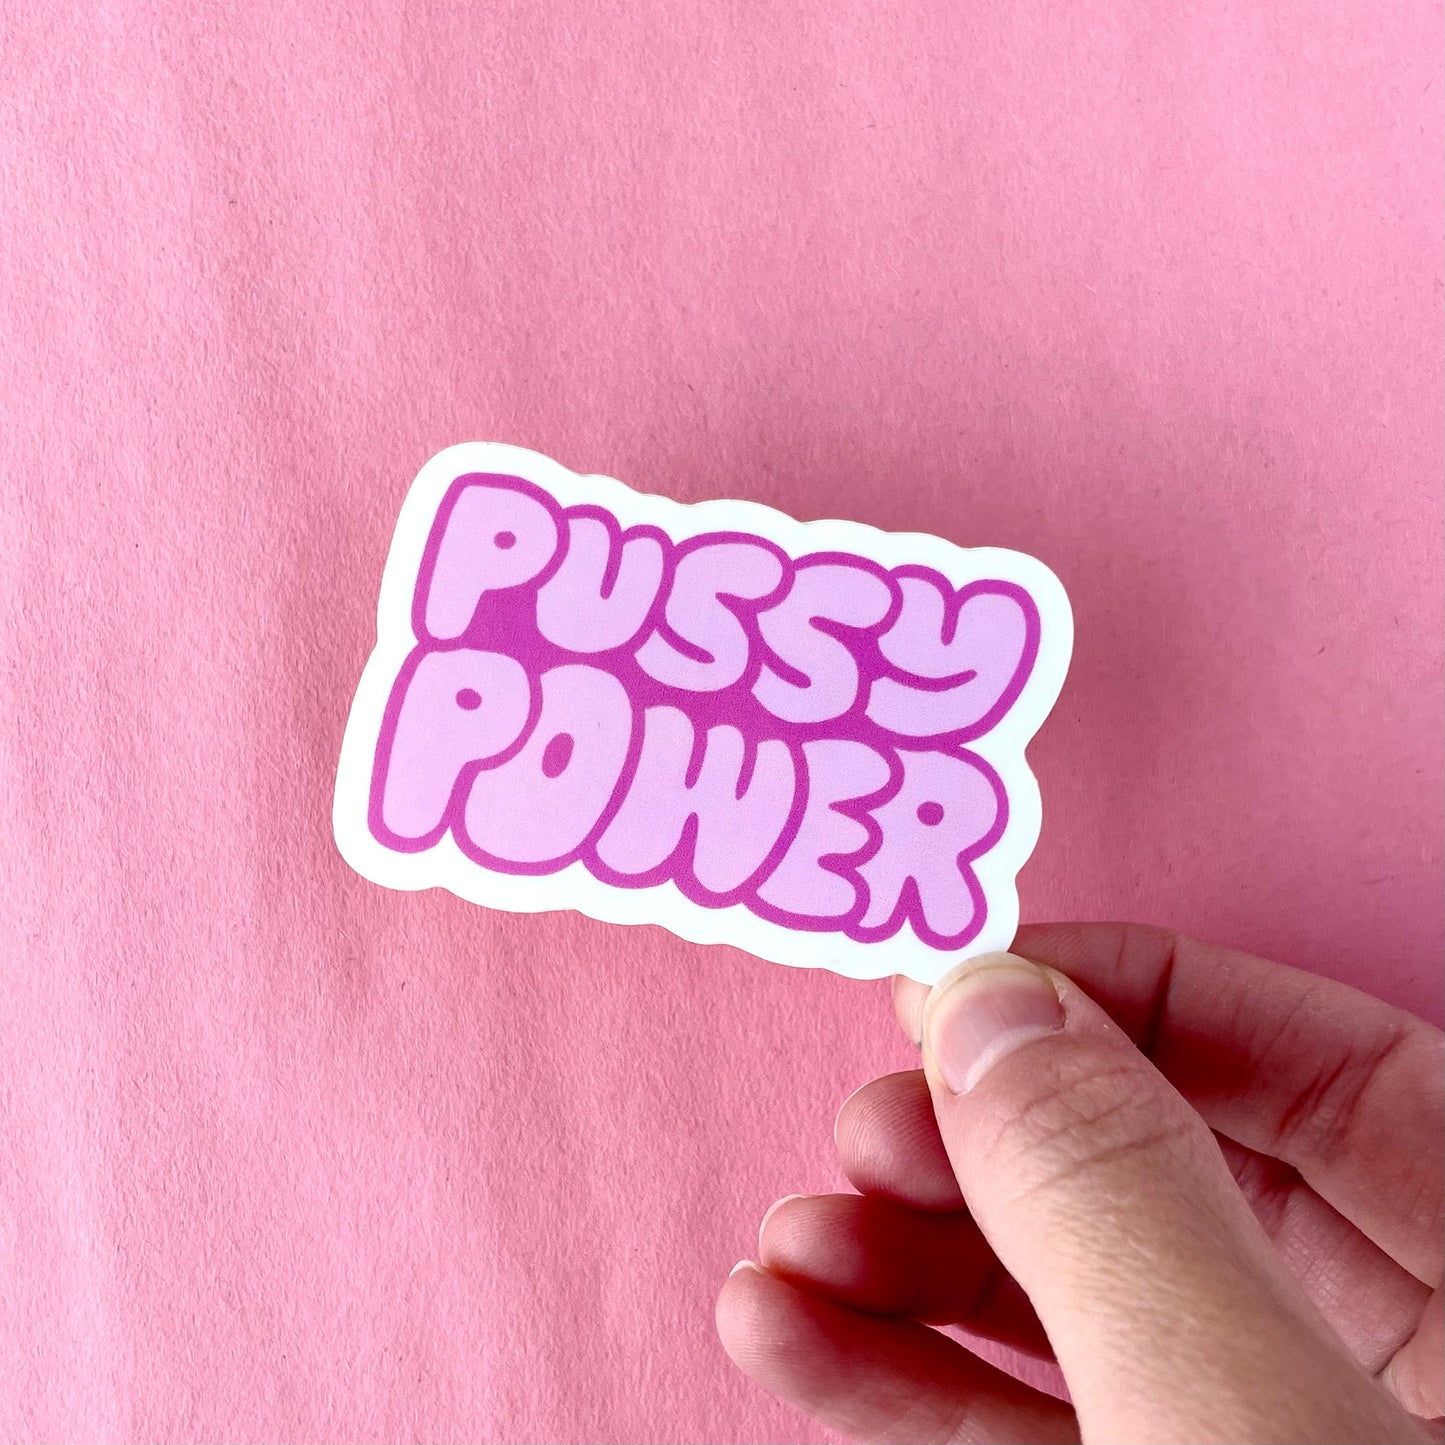 Pussy Power Sticker